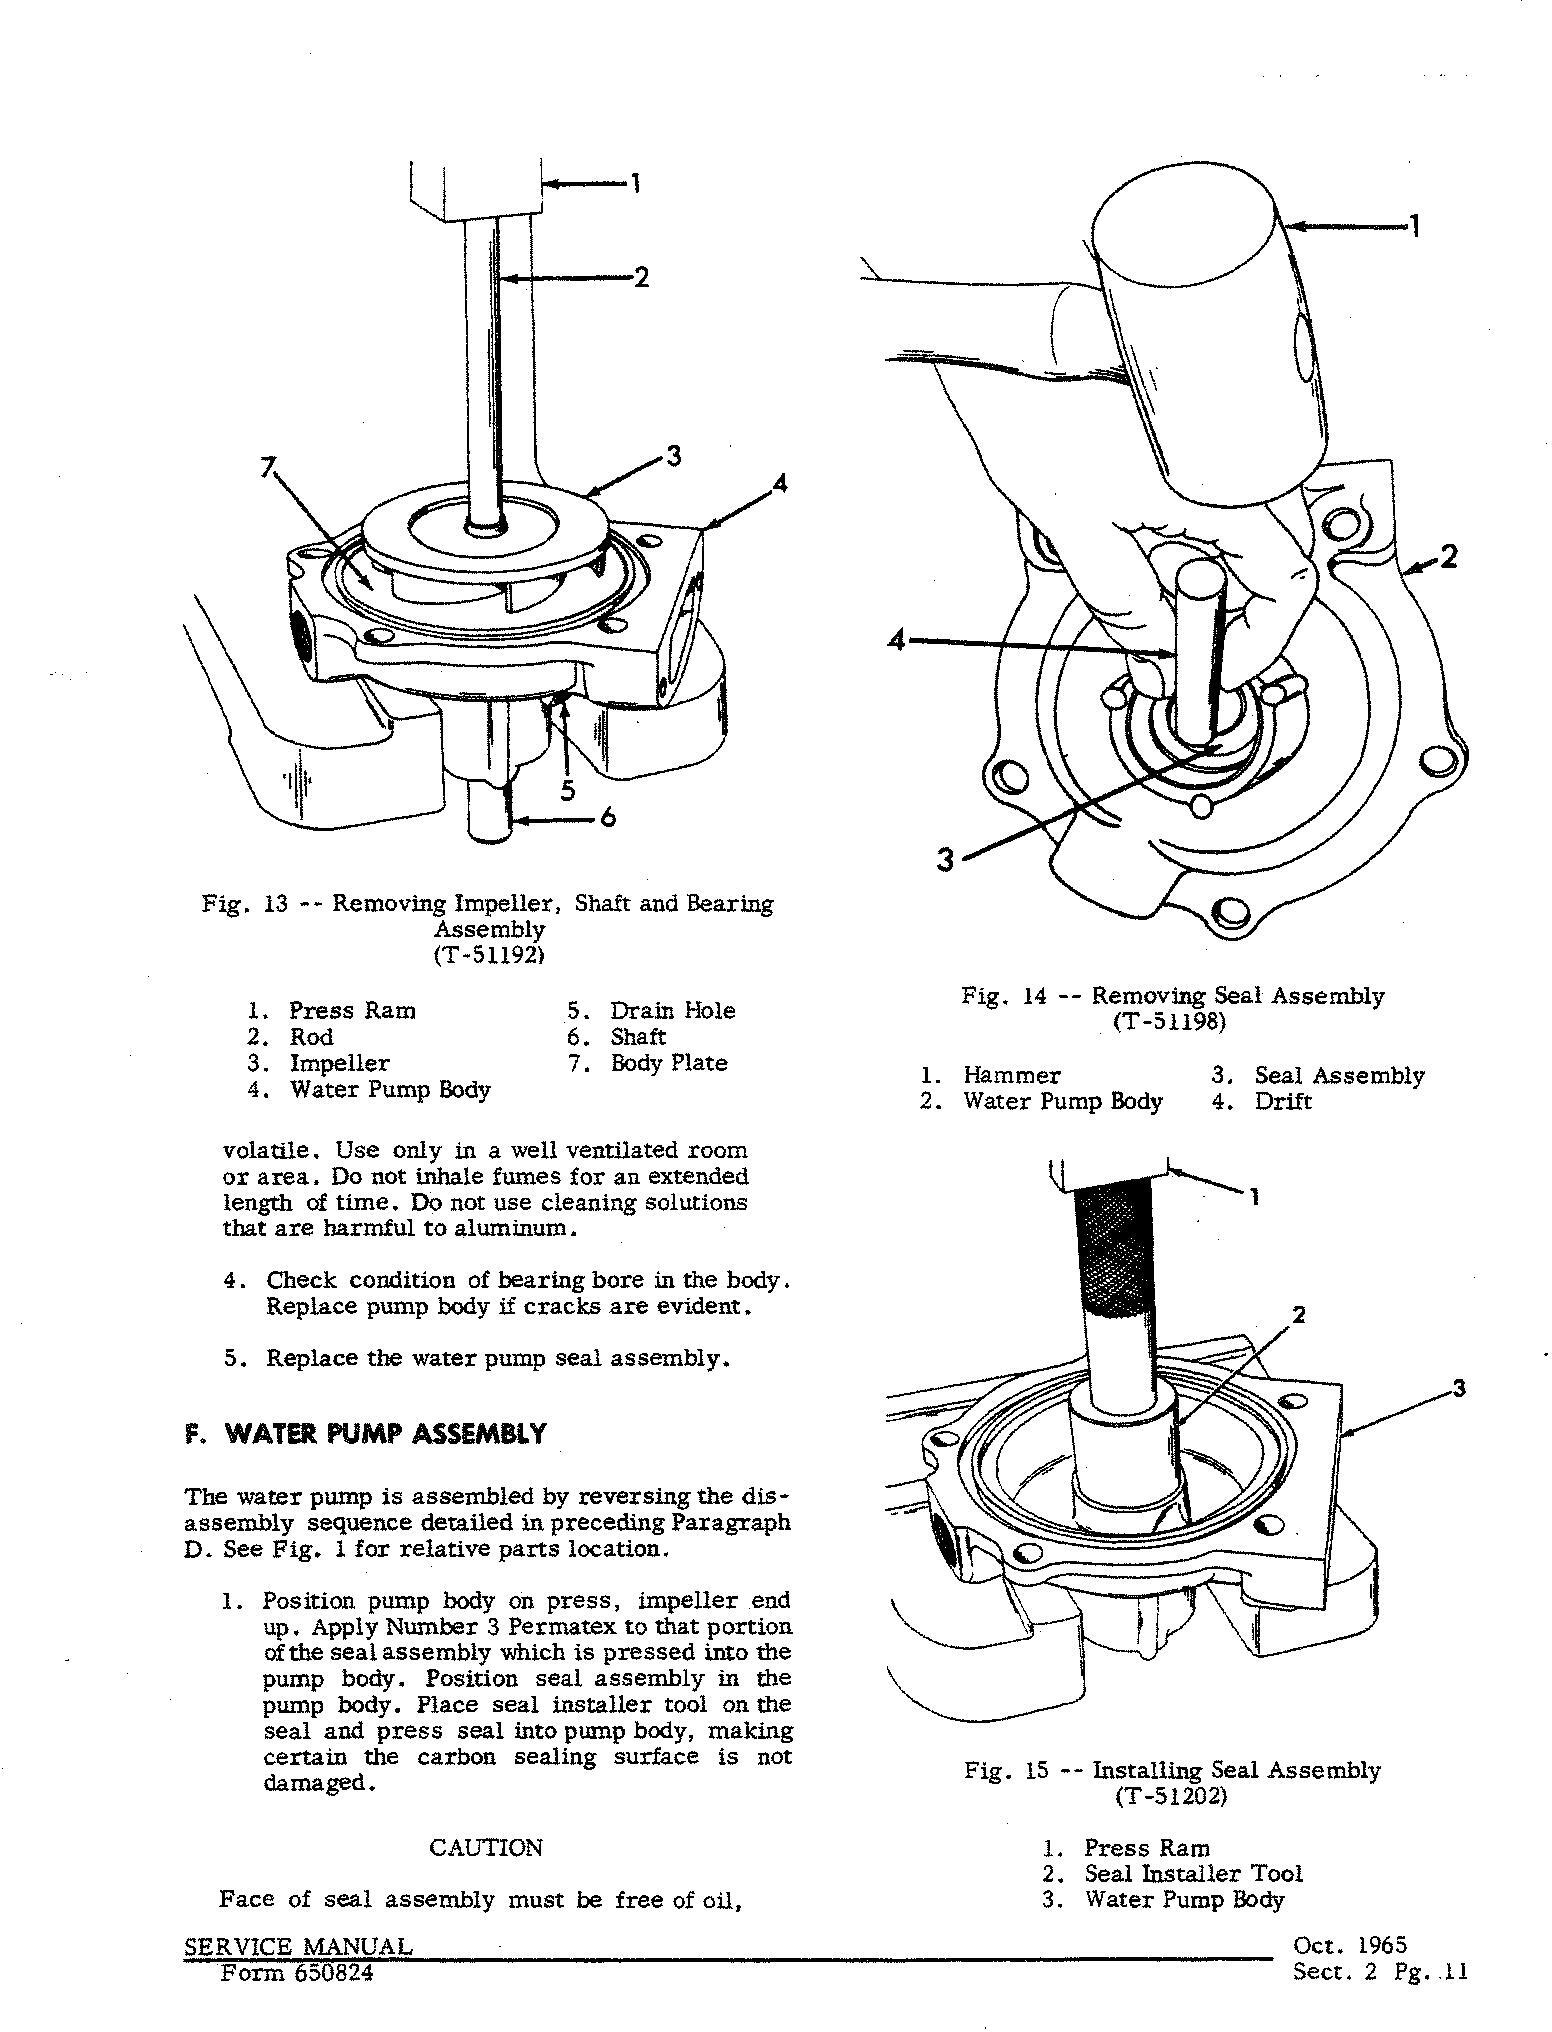 Fiat-Allis 645B Wheel Loader Service Manual - 2